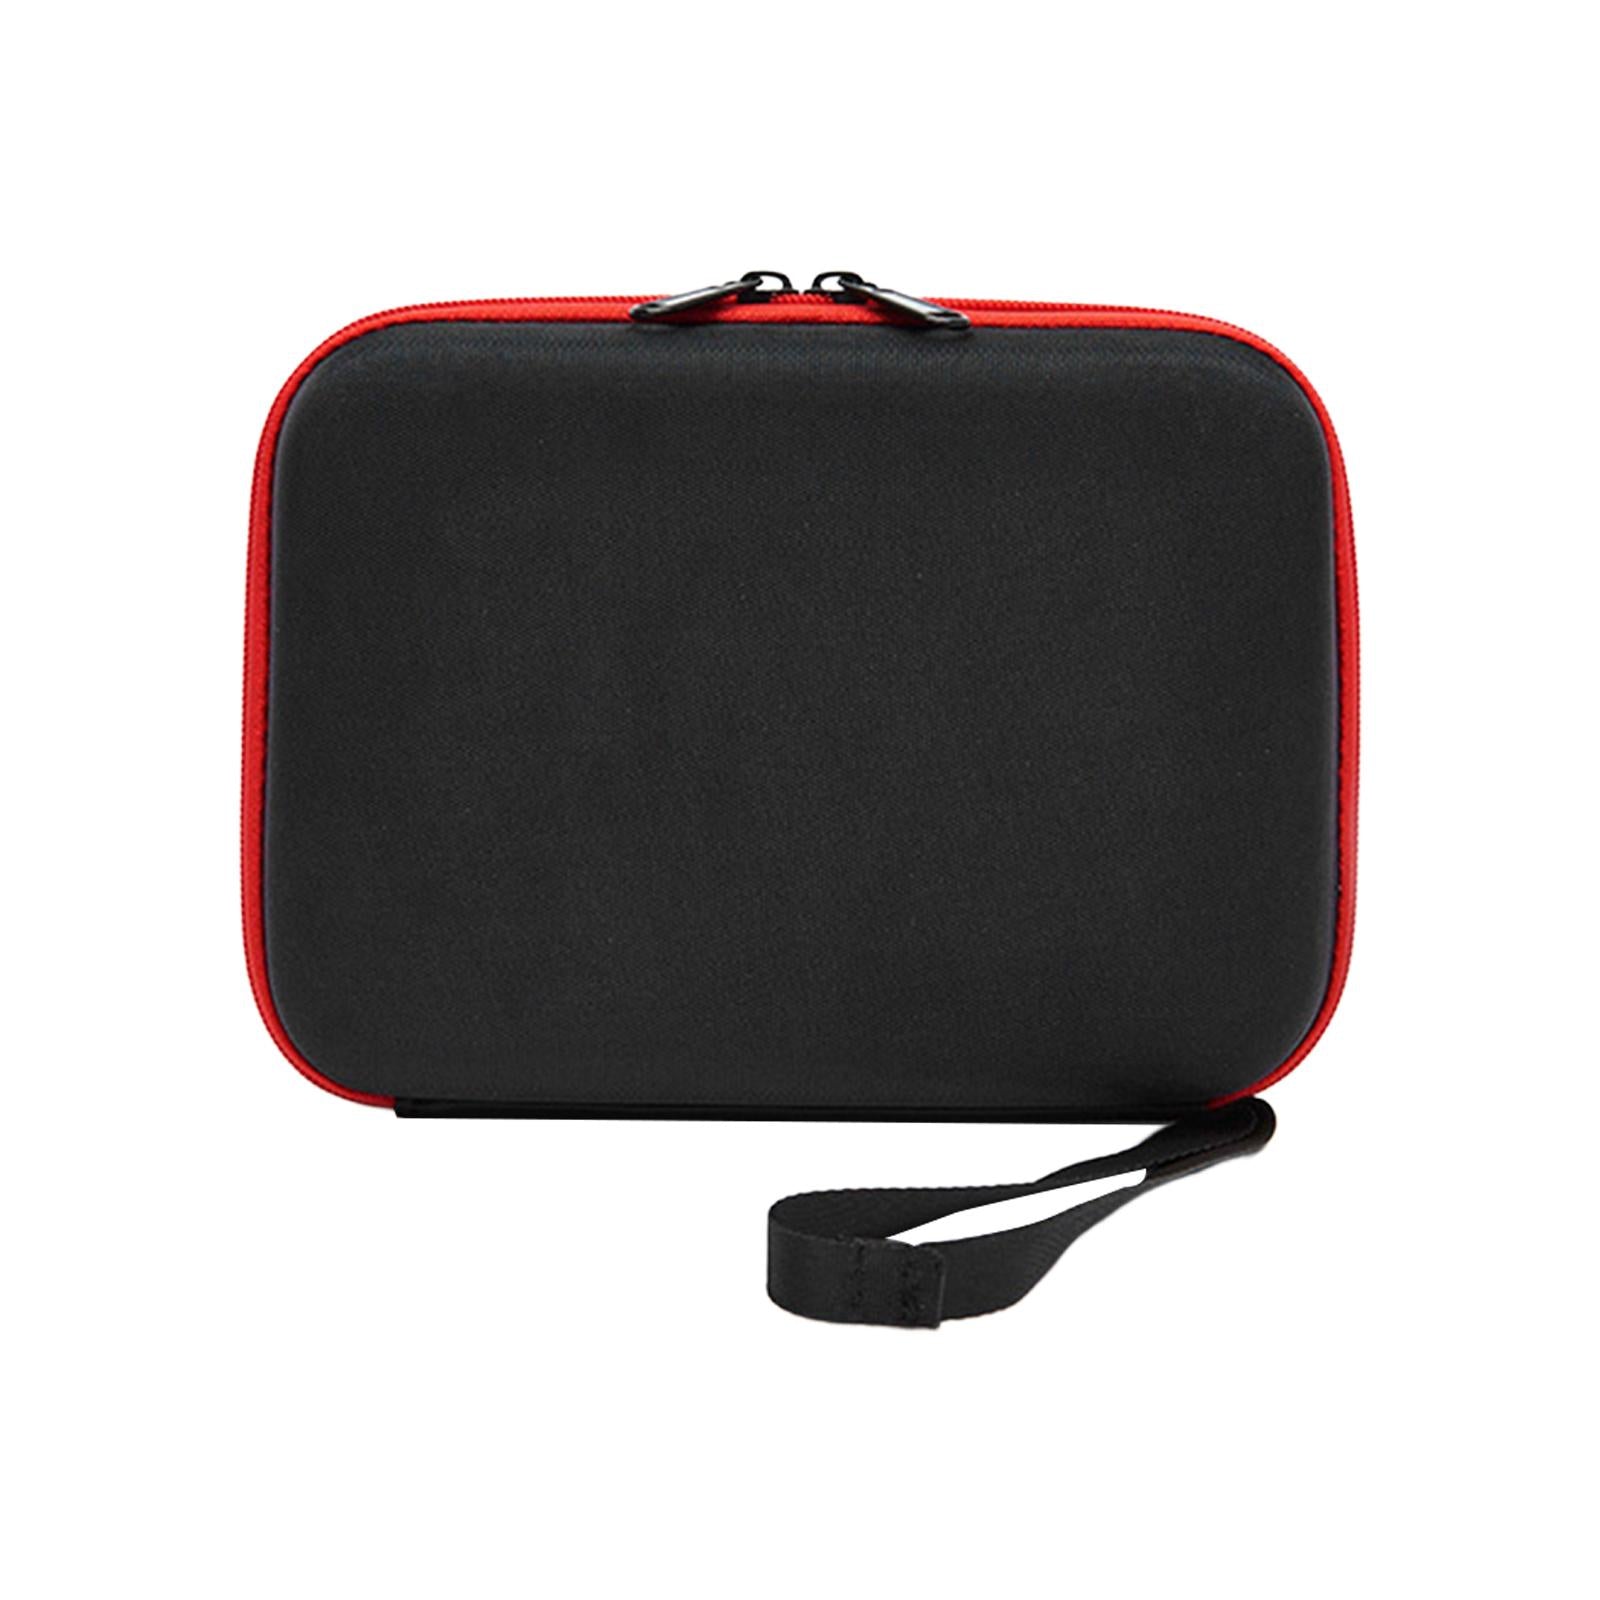 Stabilizer Case Pouch Hard EVA Shell Bag for Flow Stabilizer Handheld Gimbal Black